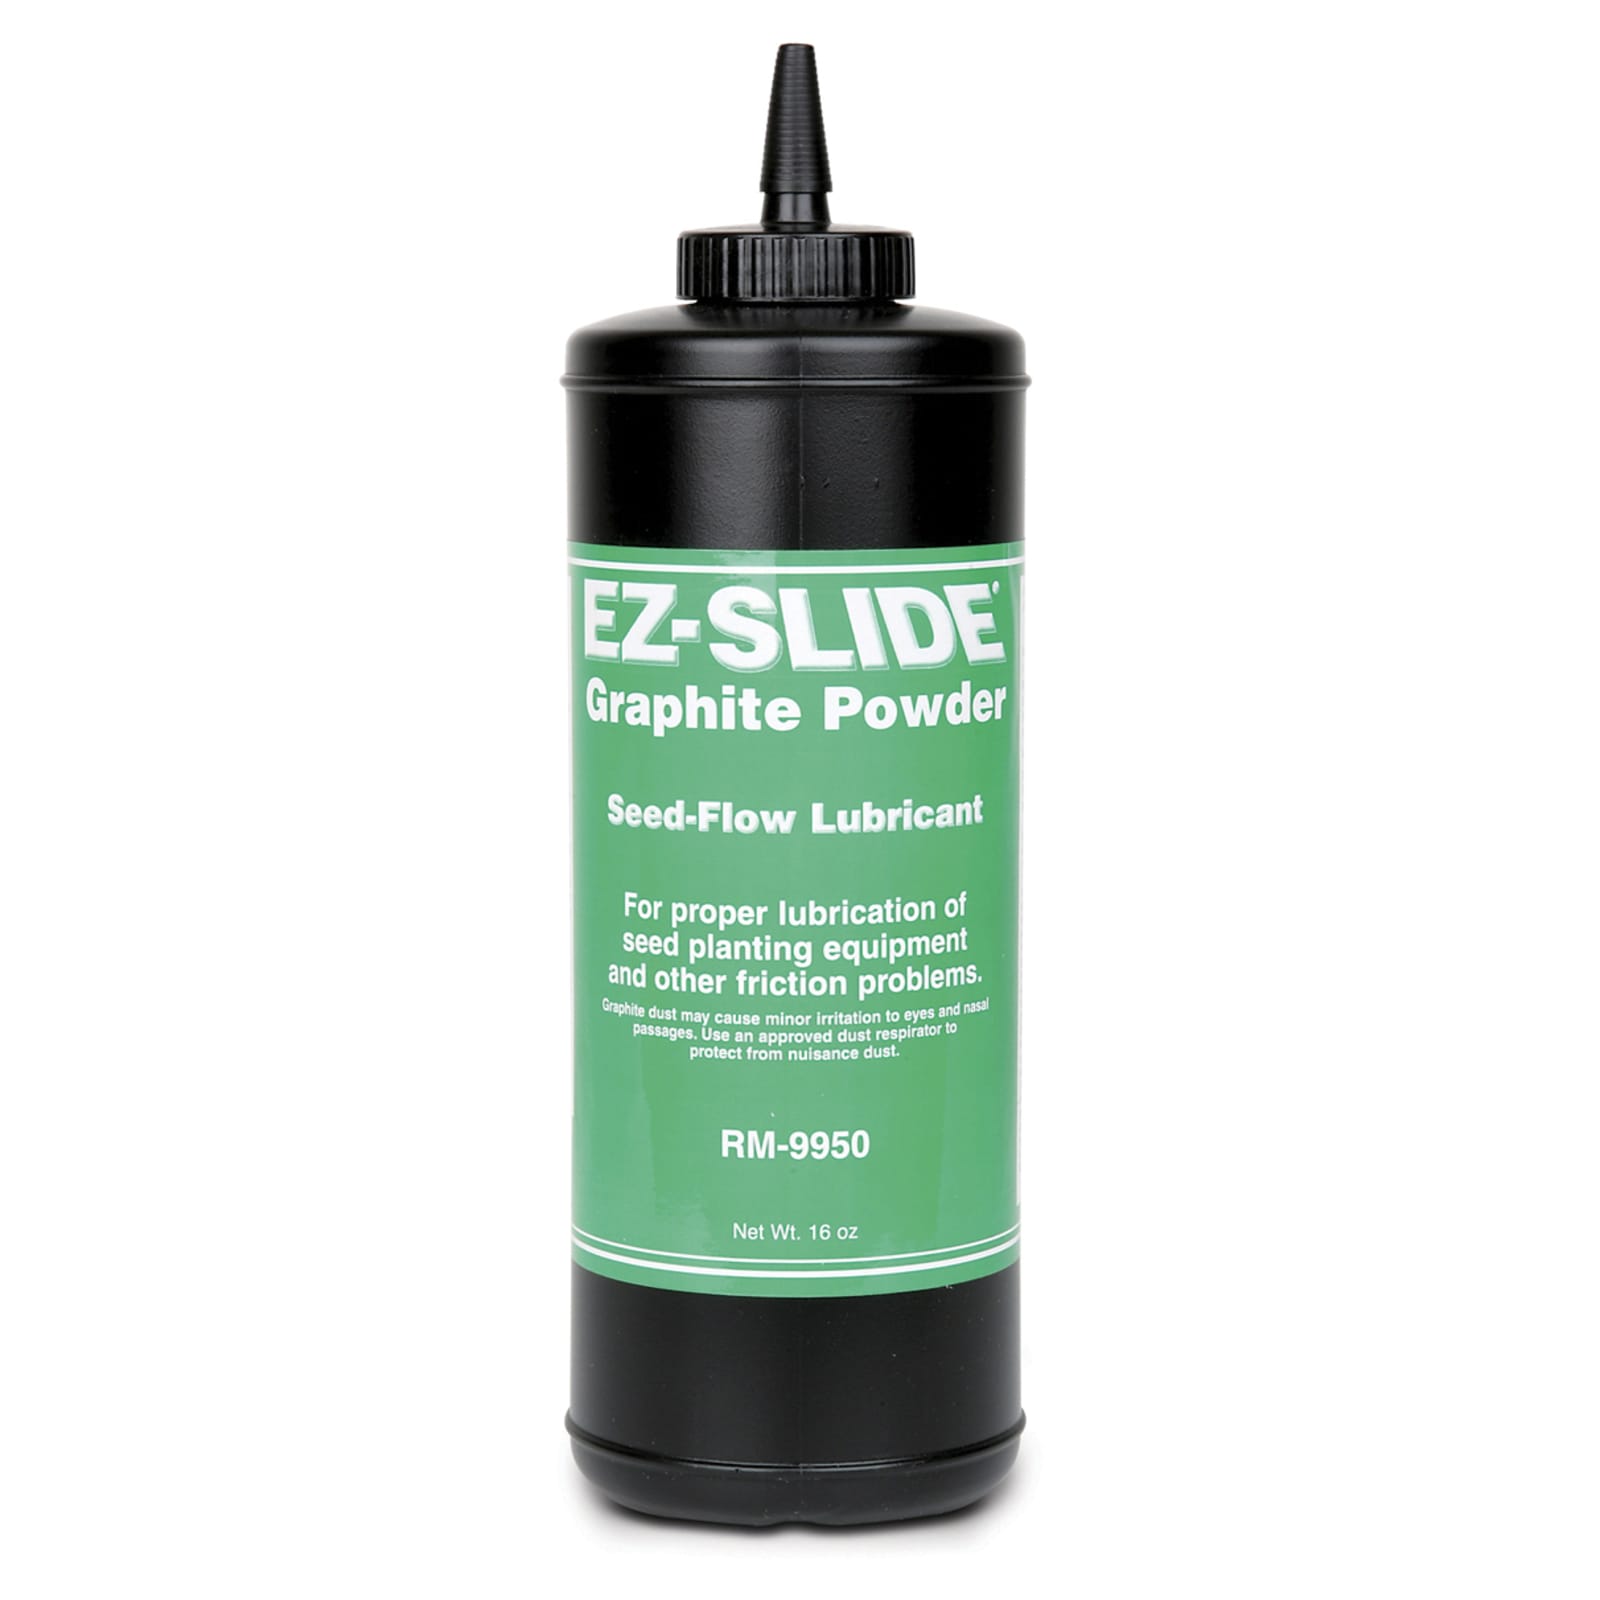 Graphite Powder Seed-Flow Lubricant by Ez-Slide at Fleet Farm